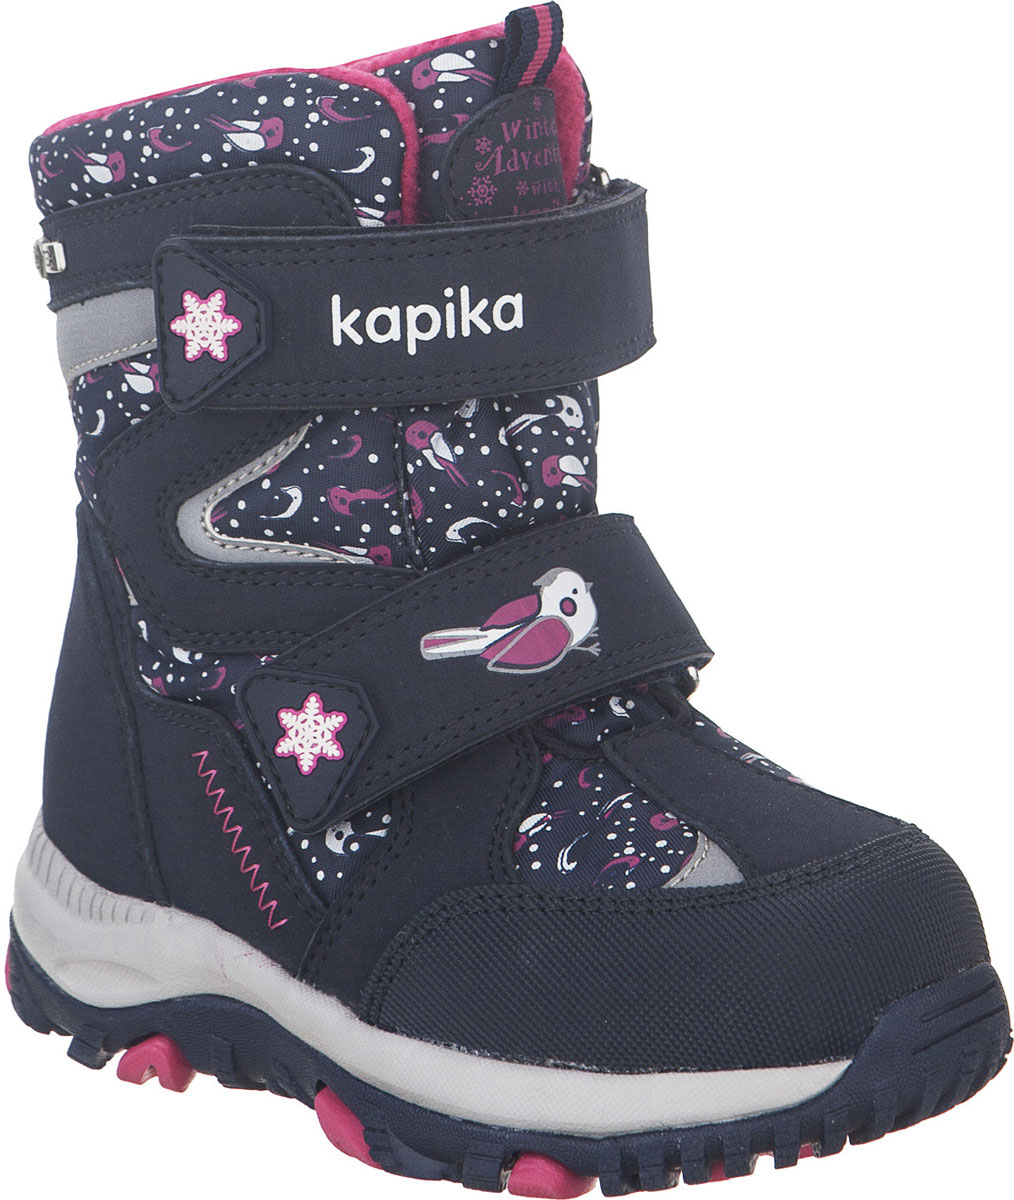 Ботинки для девочки Kapika, цвет: темно-синий, фуксия. 41222-1. Размер 25